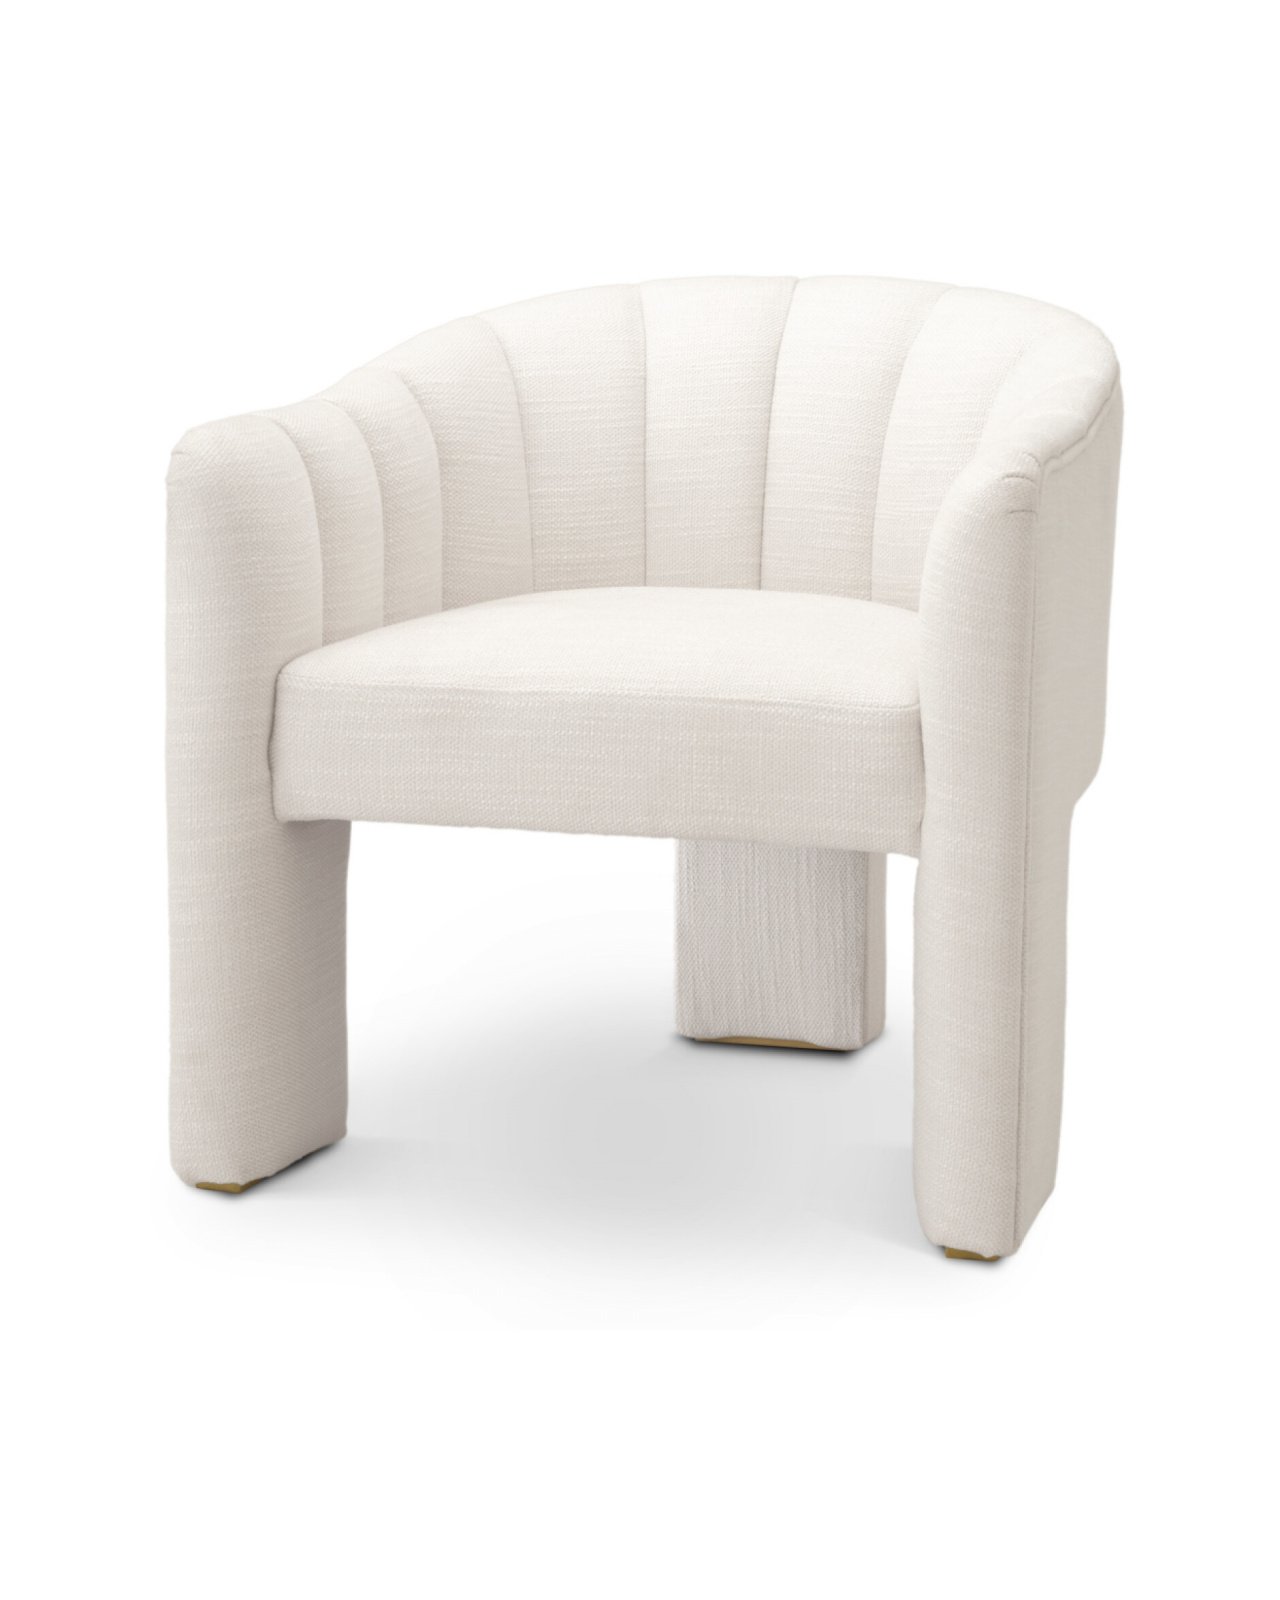 Aurelius Chair Avalon White OUTLET